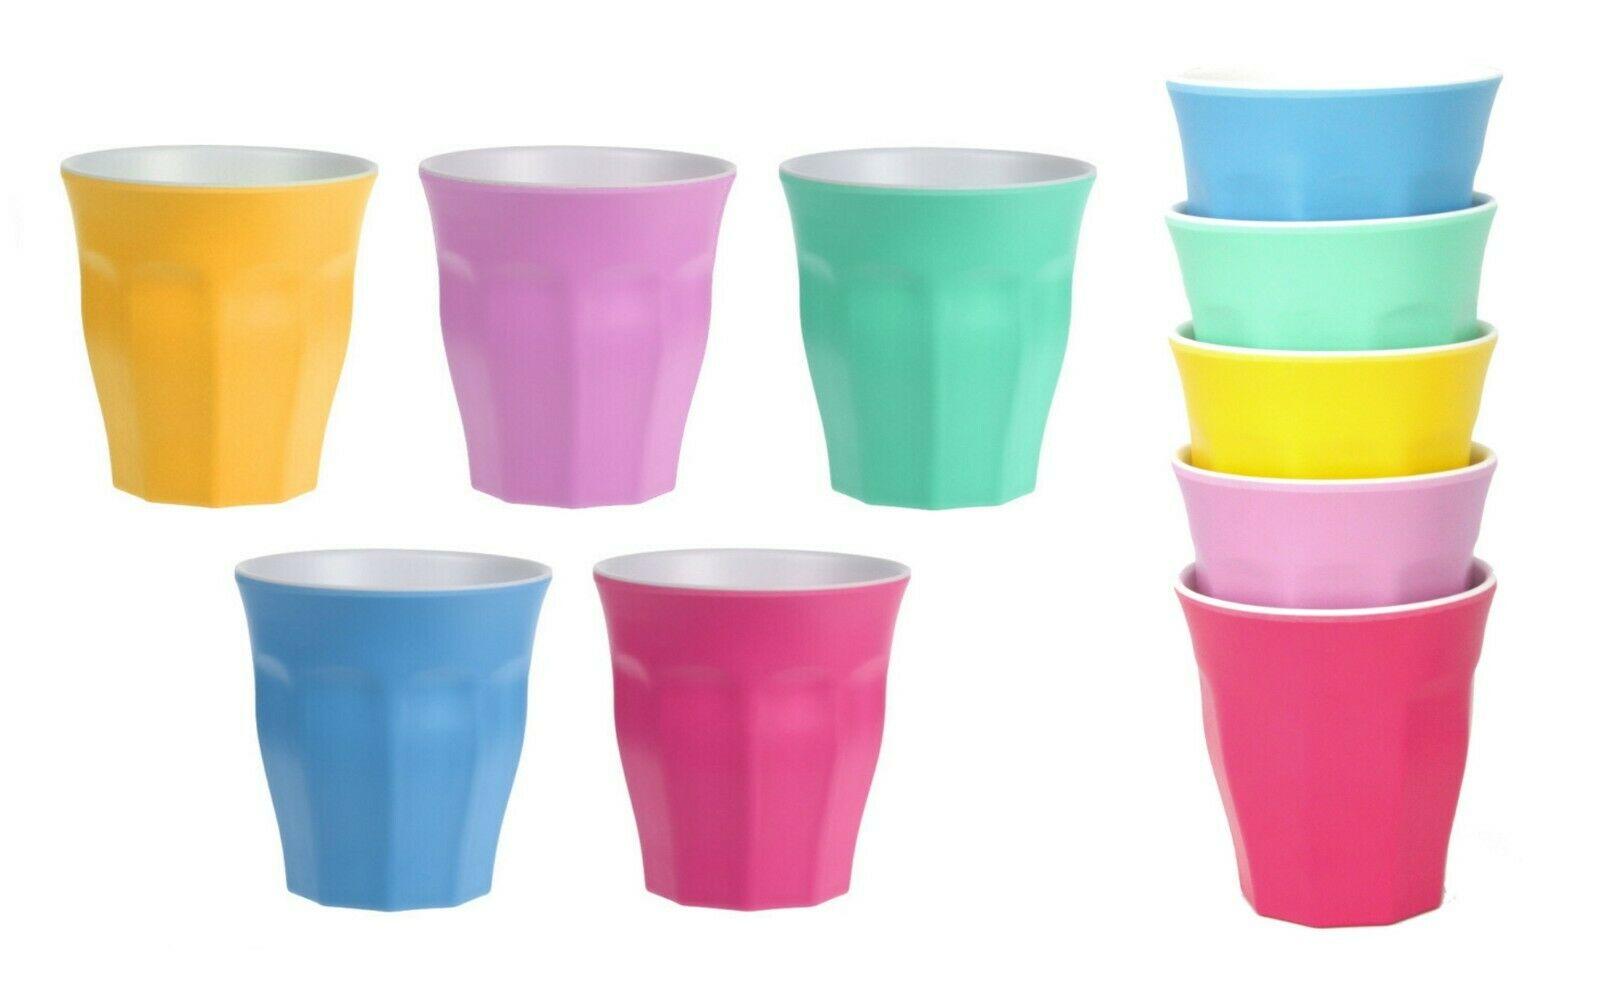 8pcs Plastic Drinking Glasses Tumbler Cups Plastic Cups Reusable Plastic  Glasses